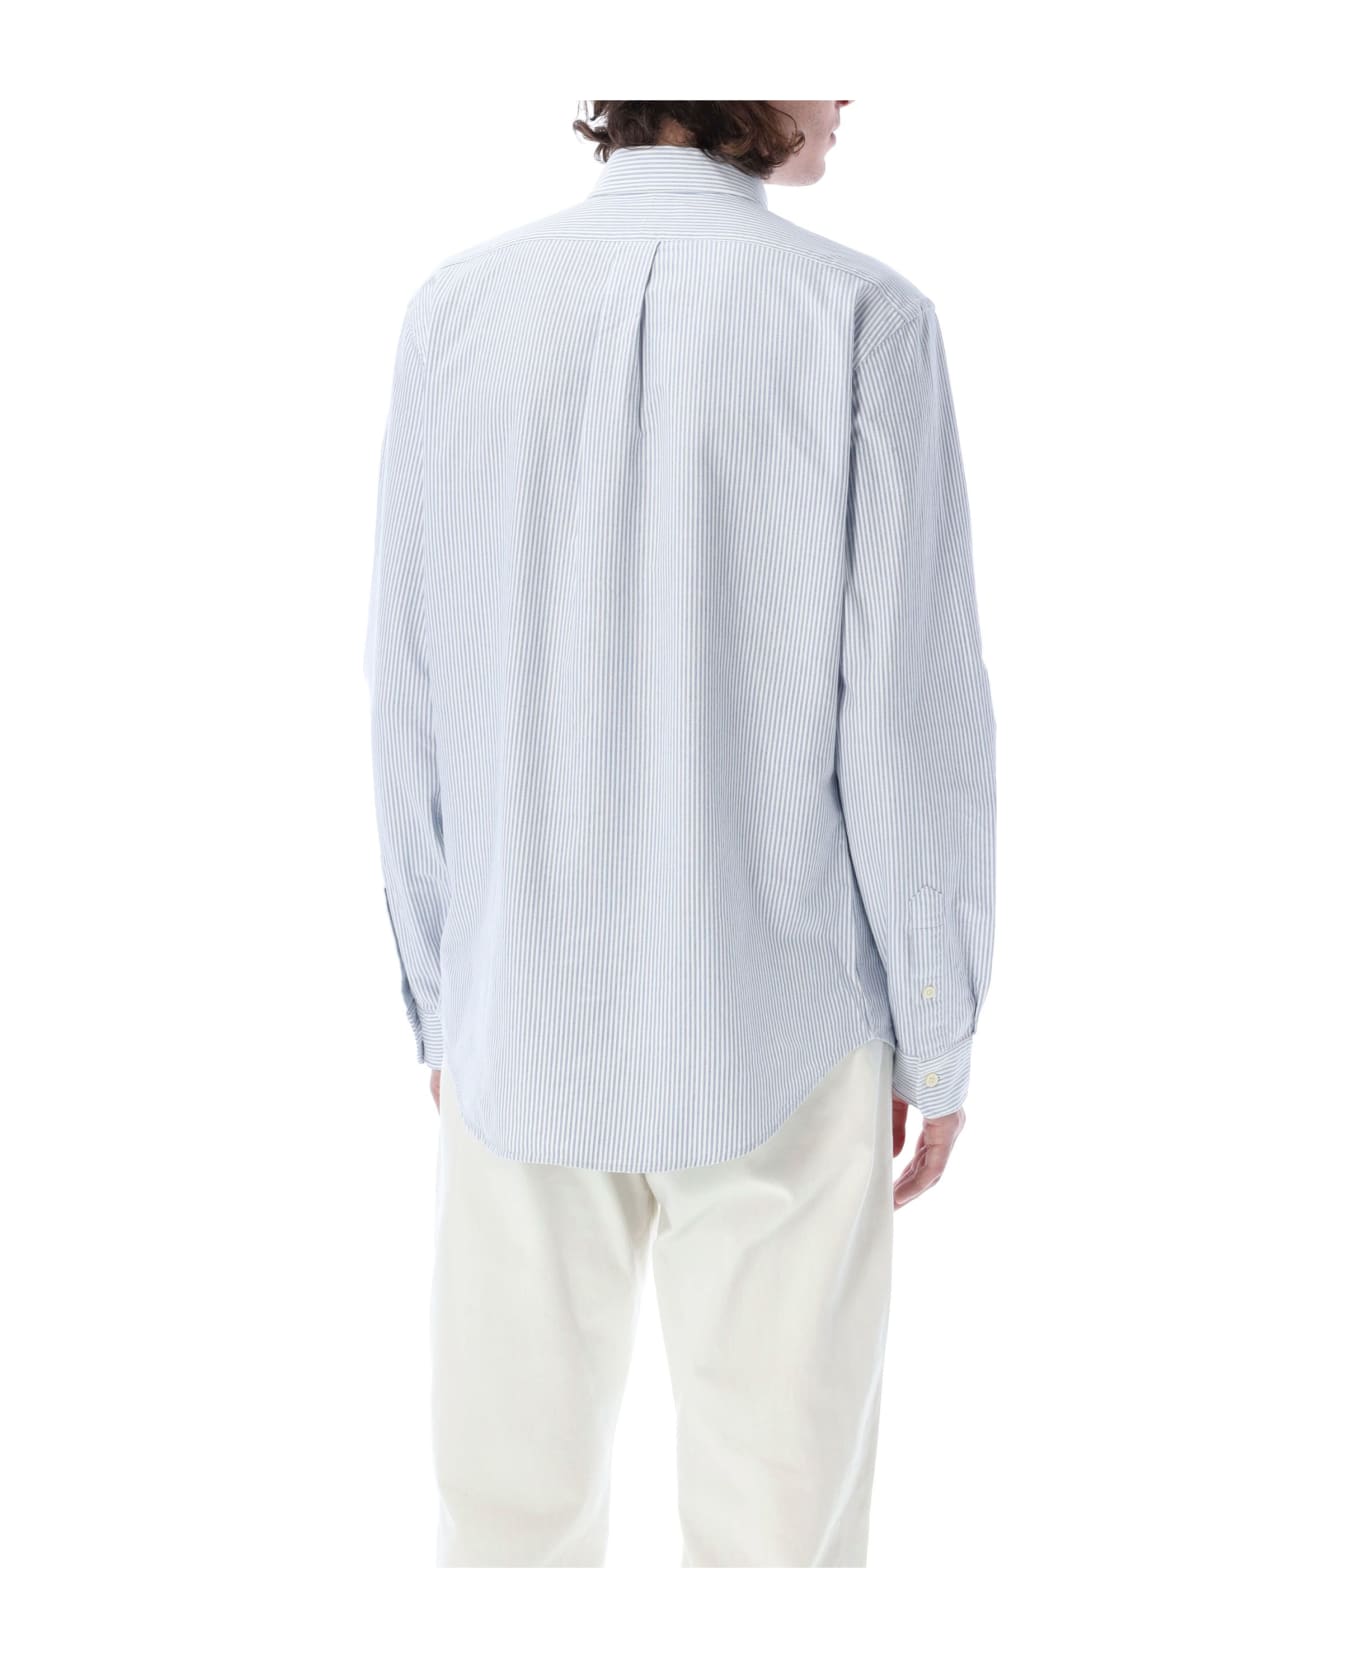 Polo Ralph Lauren Custom Fit Shirt - BLUE WHITE STRIPES